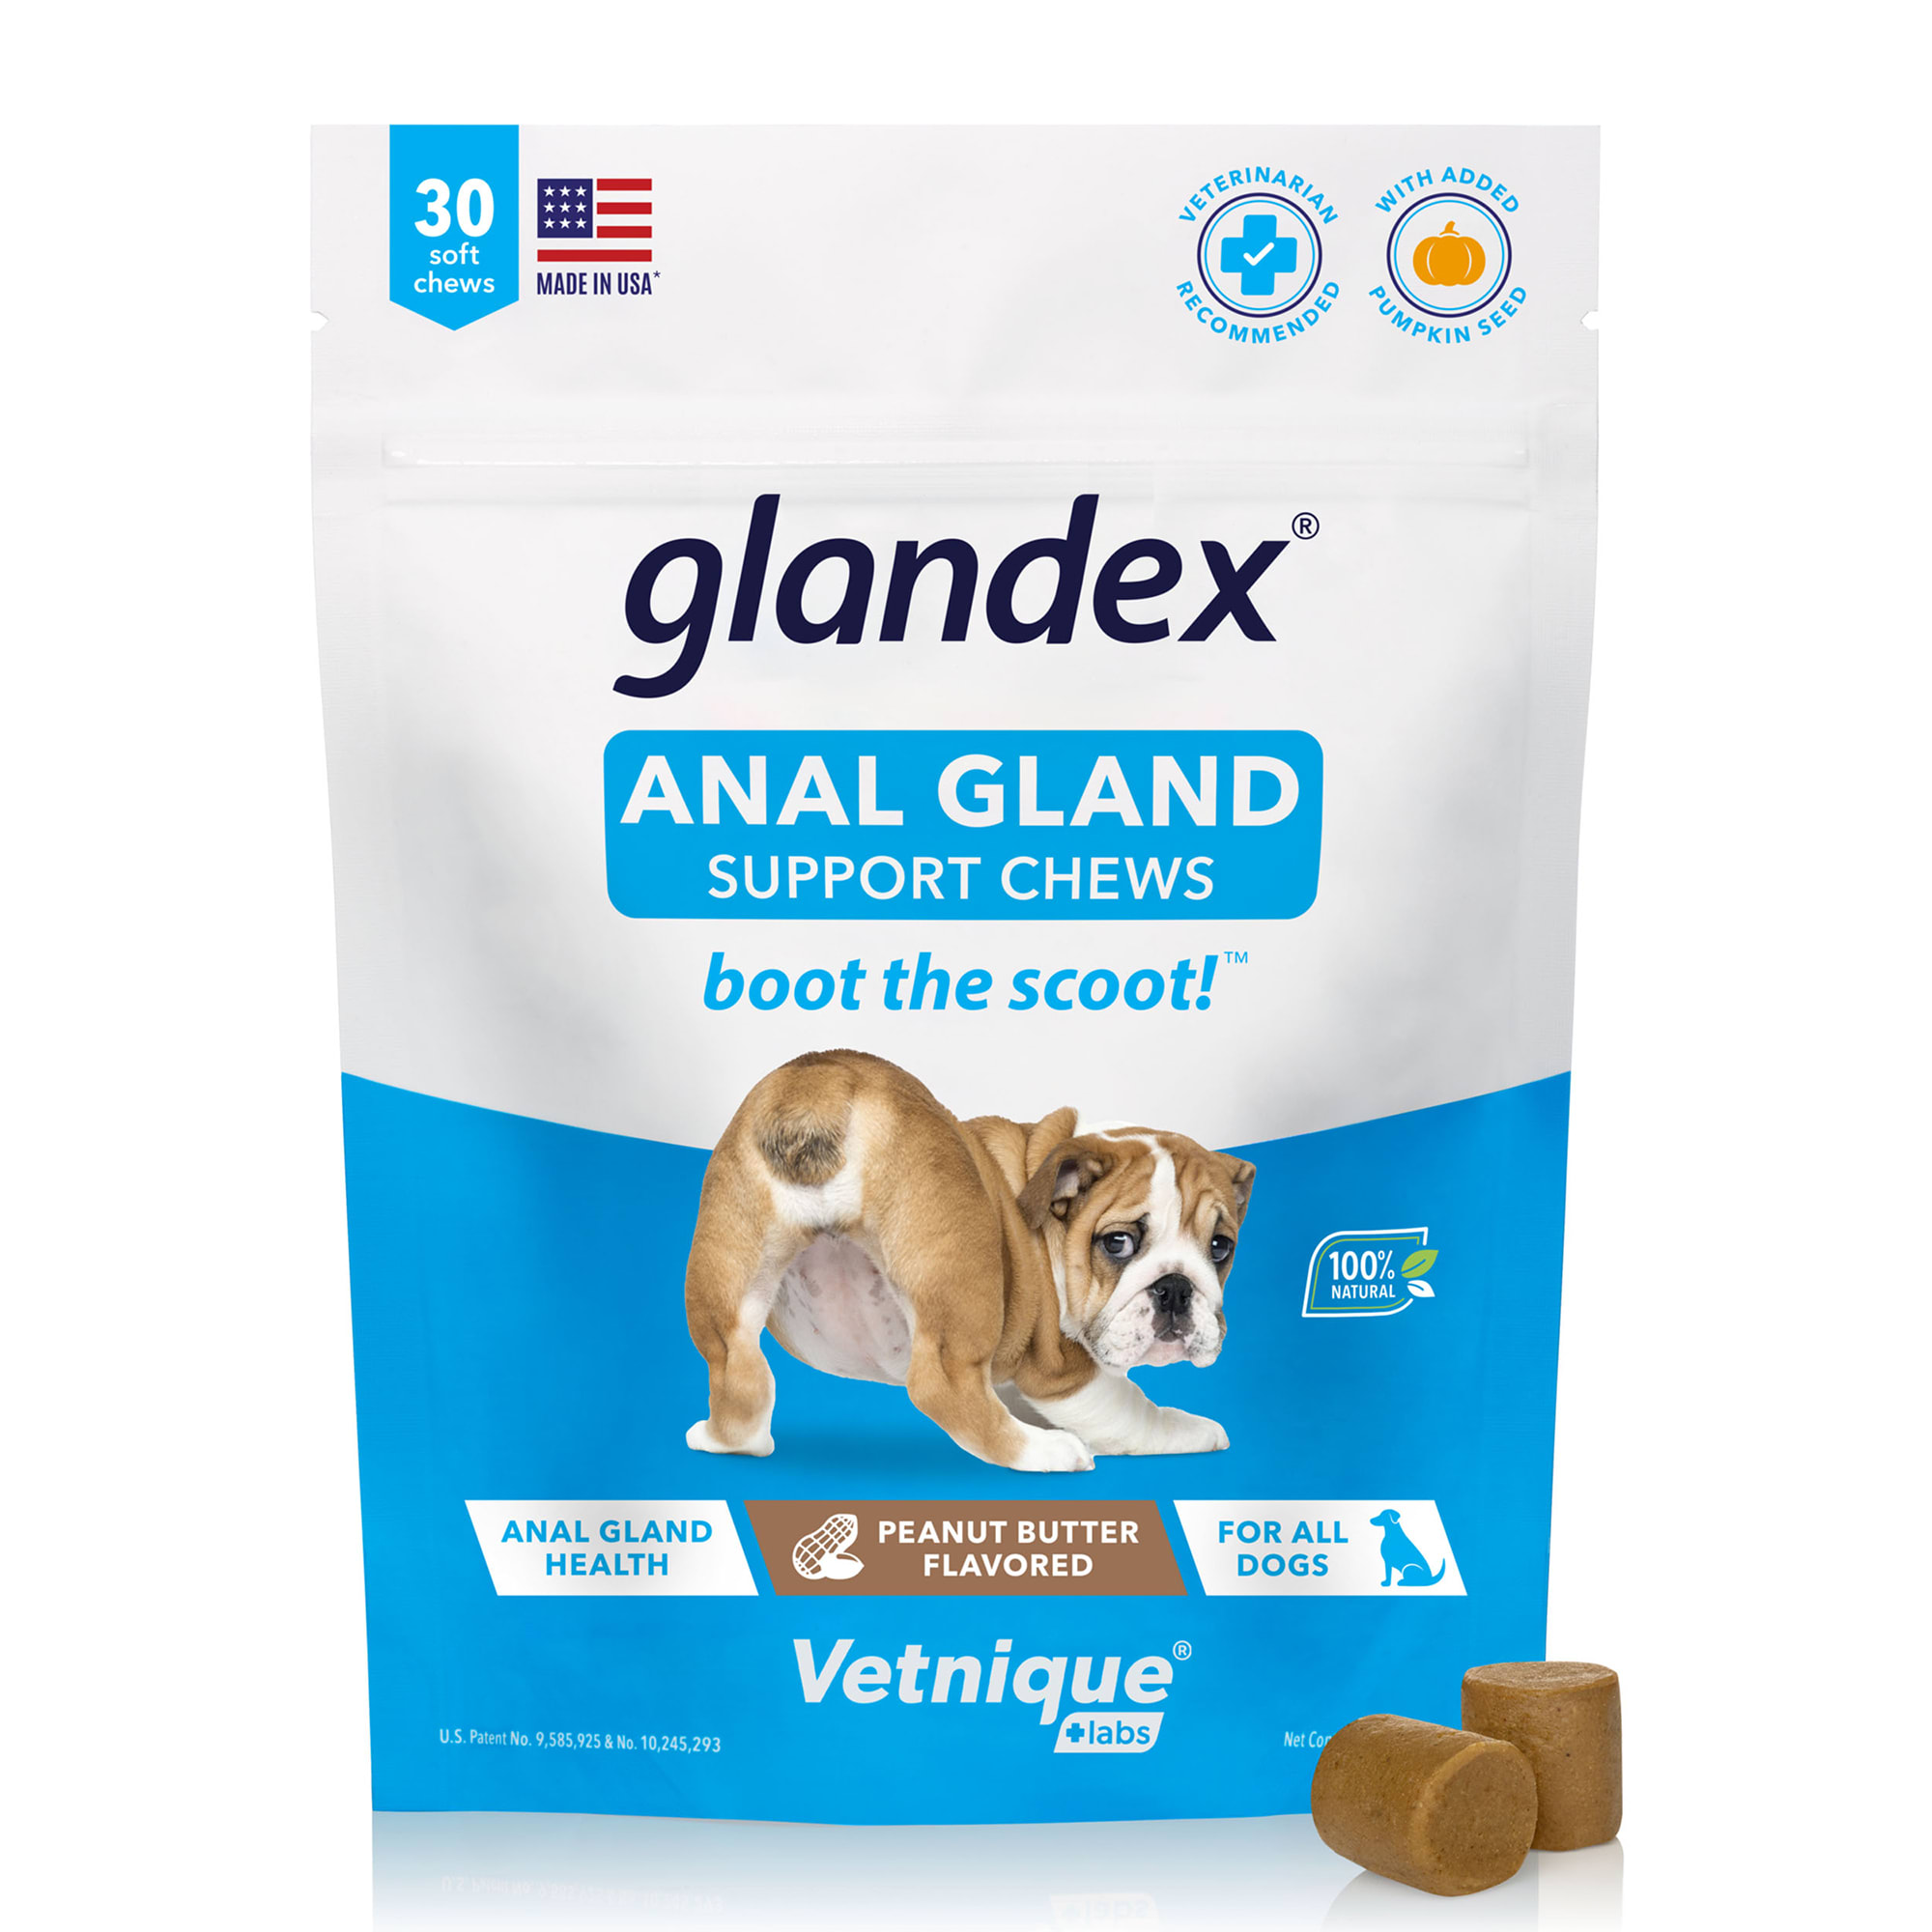 glandex for dogs amazon